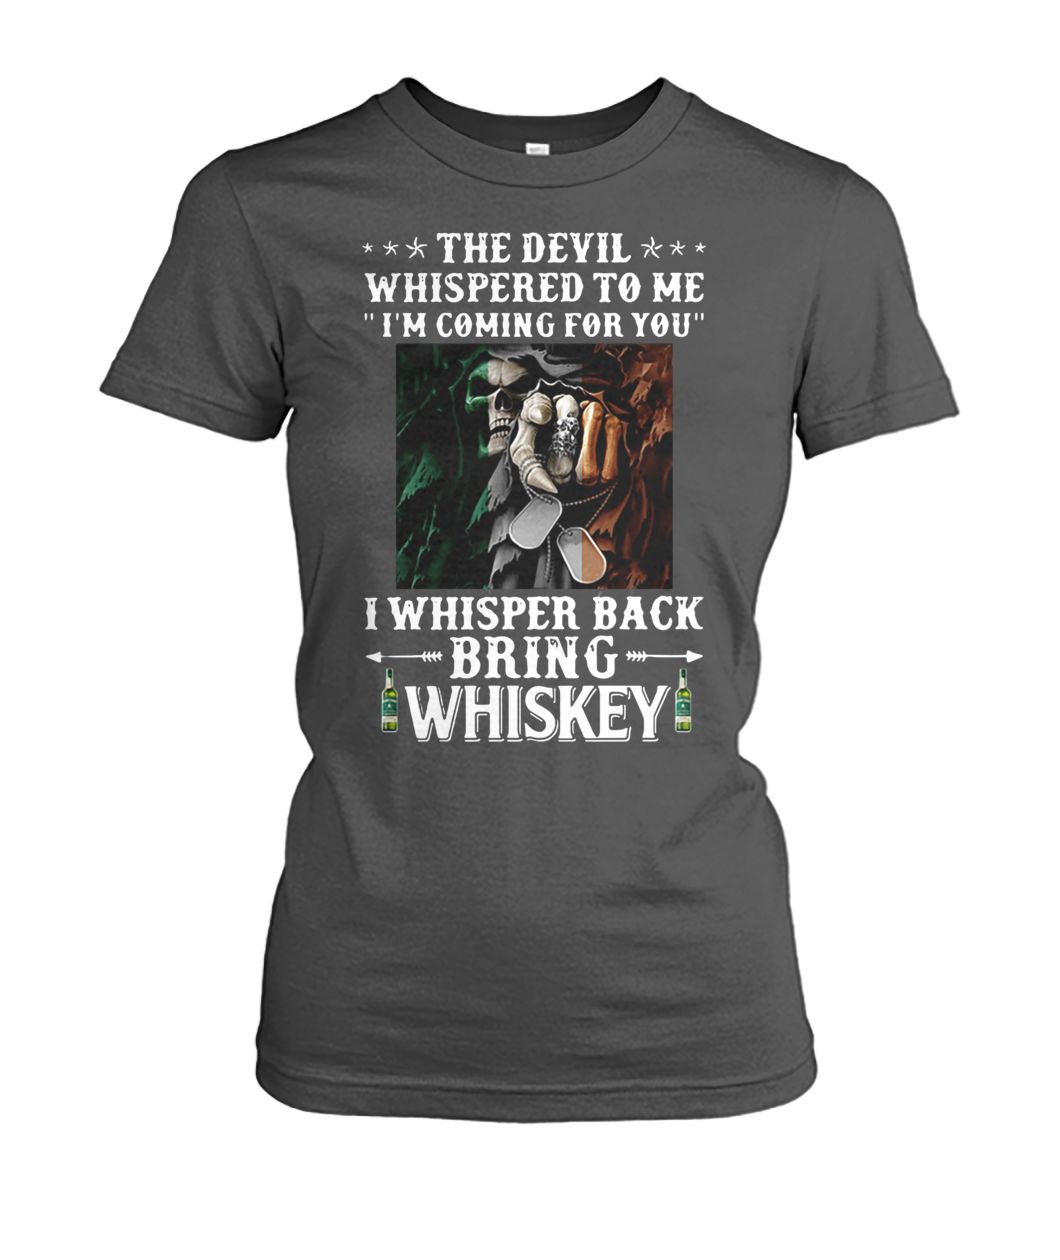 Grim reaper your next the devil whispered to me I whisper back bring whiskey women's crew tee